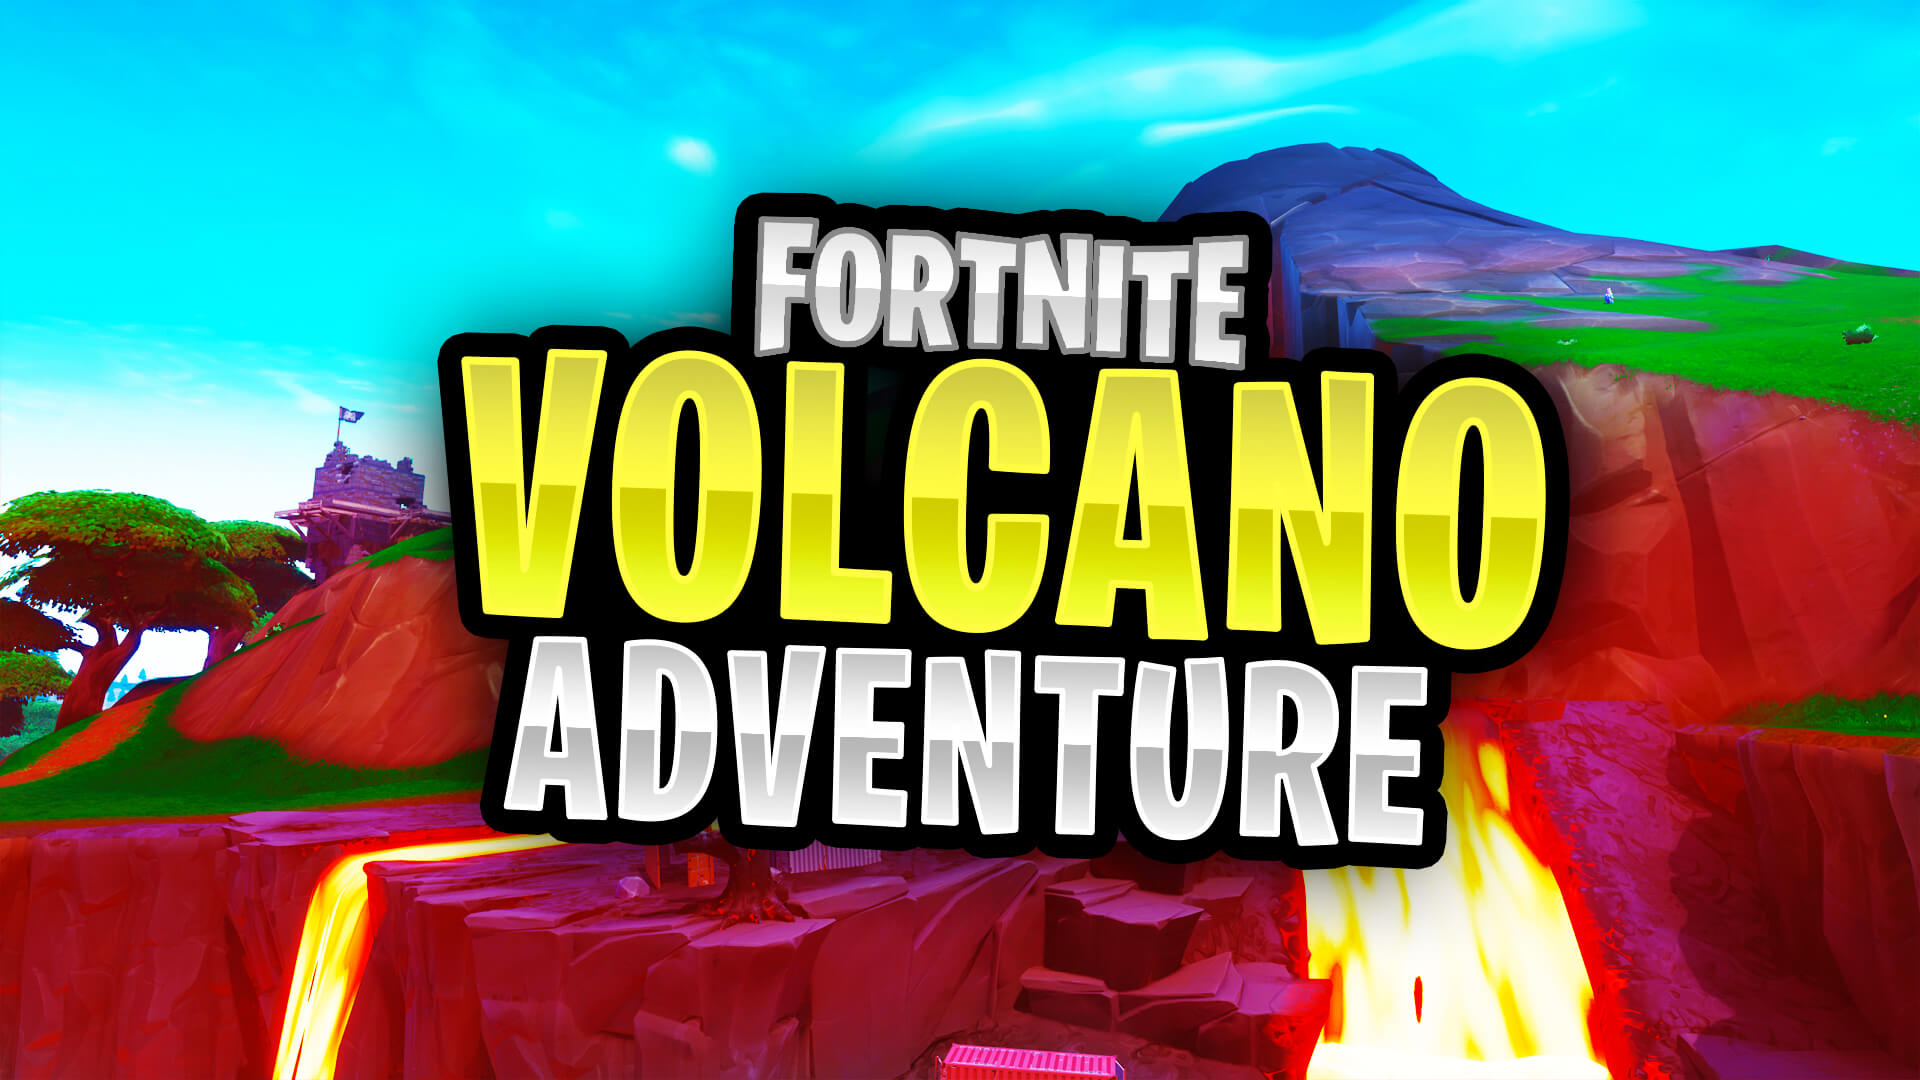 Volcano Adventure Fortnite Creative Codes Dropnite Com - volcano adventure